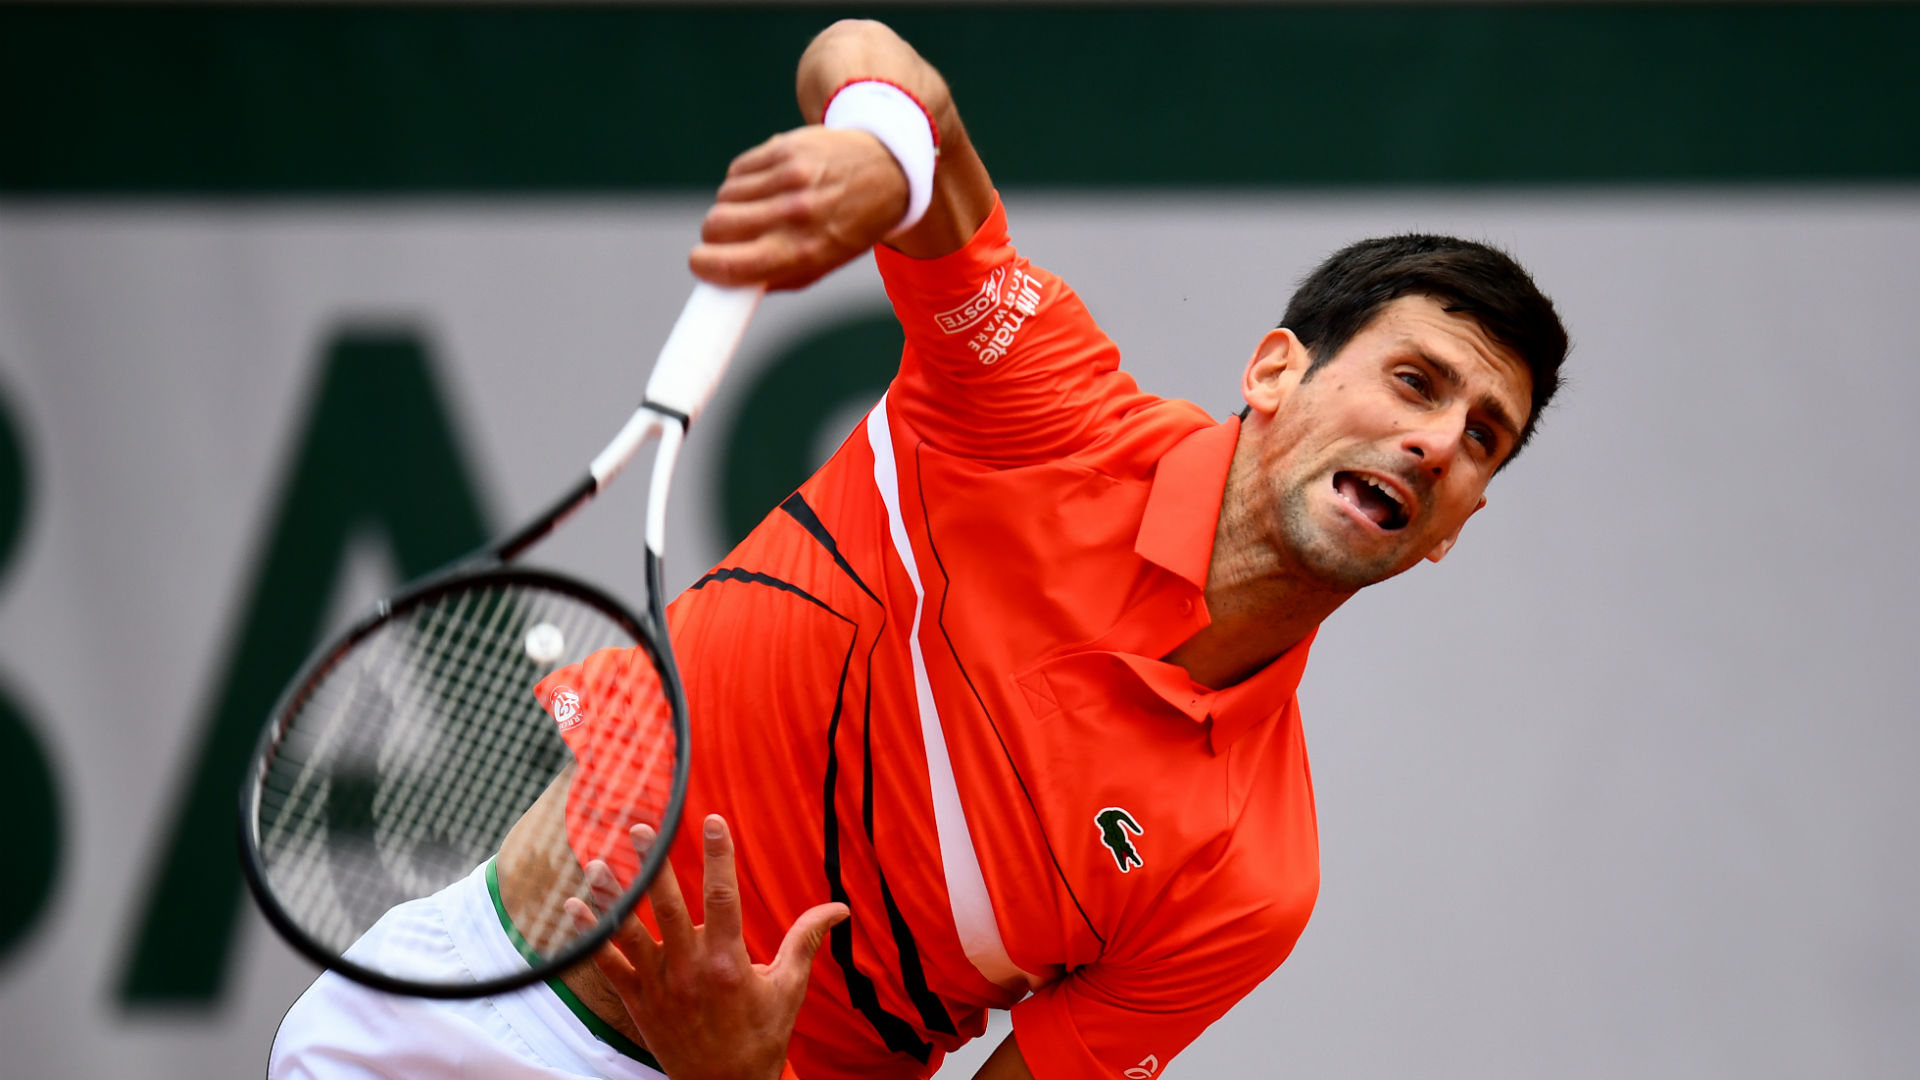 French Open: Novak Djokovic overpowers Zverev | Sporting News Canada1920 x 1080